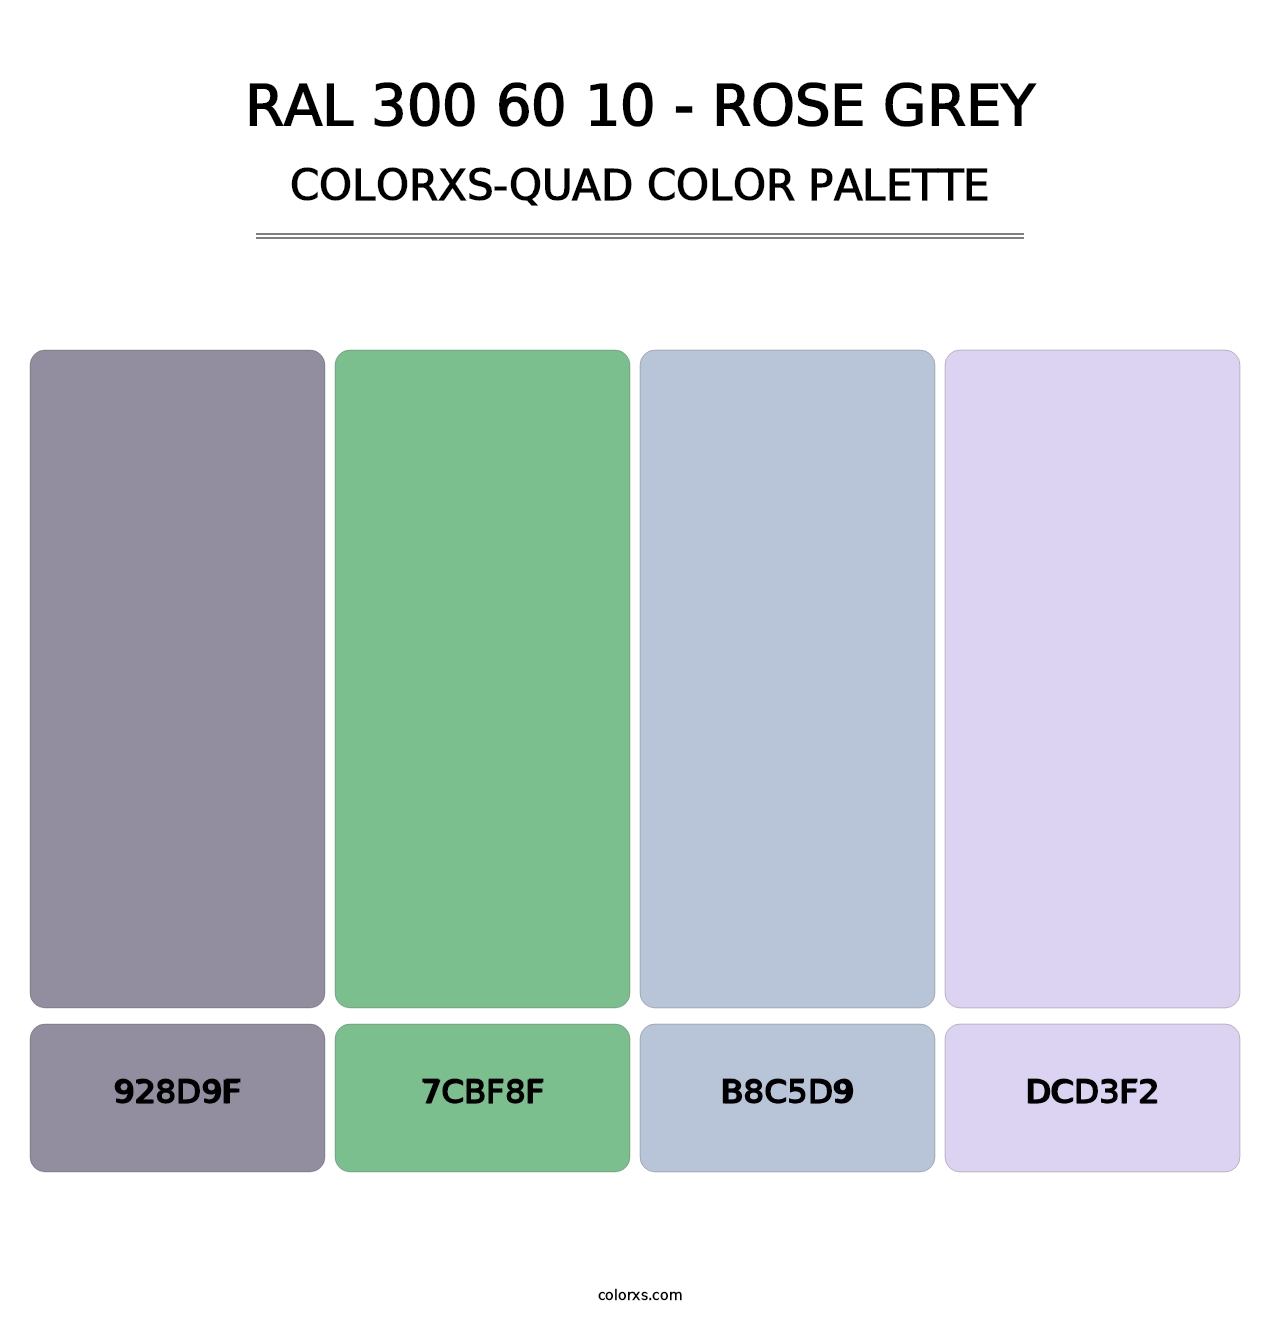 RAL 300 60 10 - Rose Grey - Colorxs Quad Palette